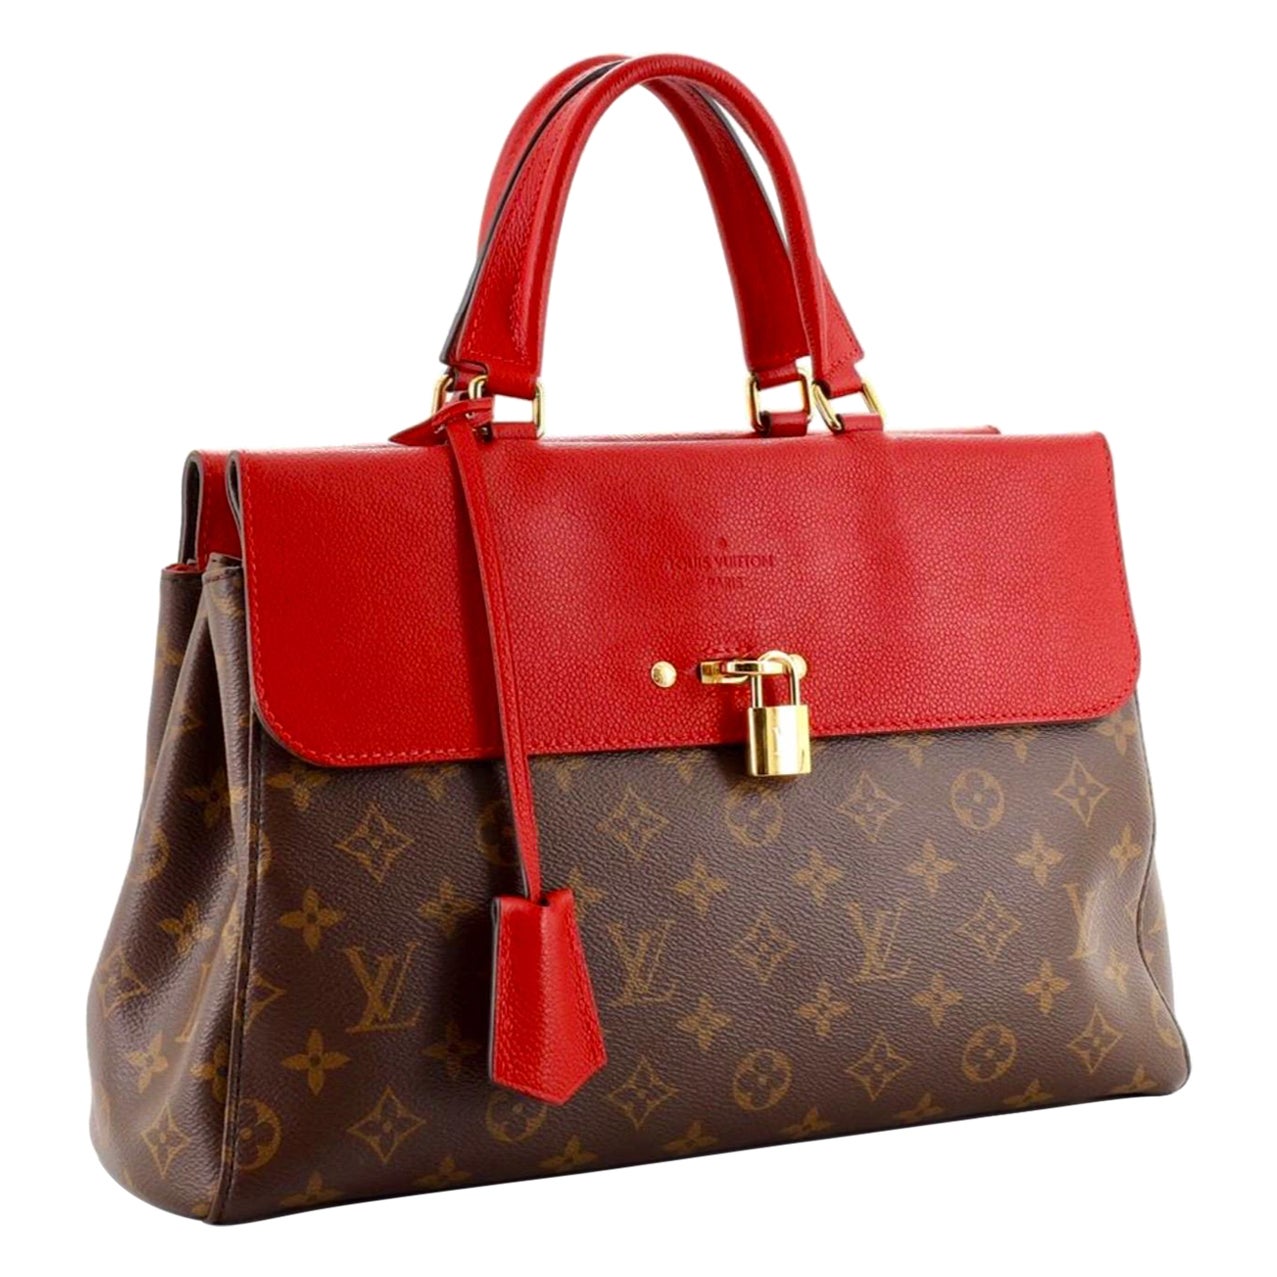 Louis Vuitton Venus Cherry Handbag Monogram Canvas and Leather Satchel Like New